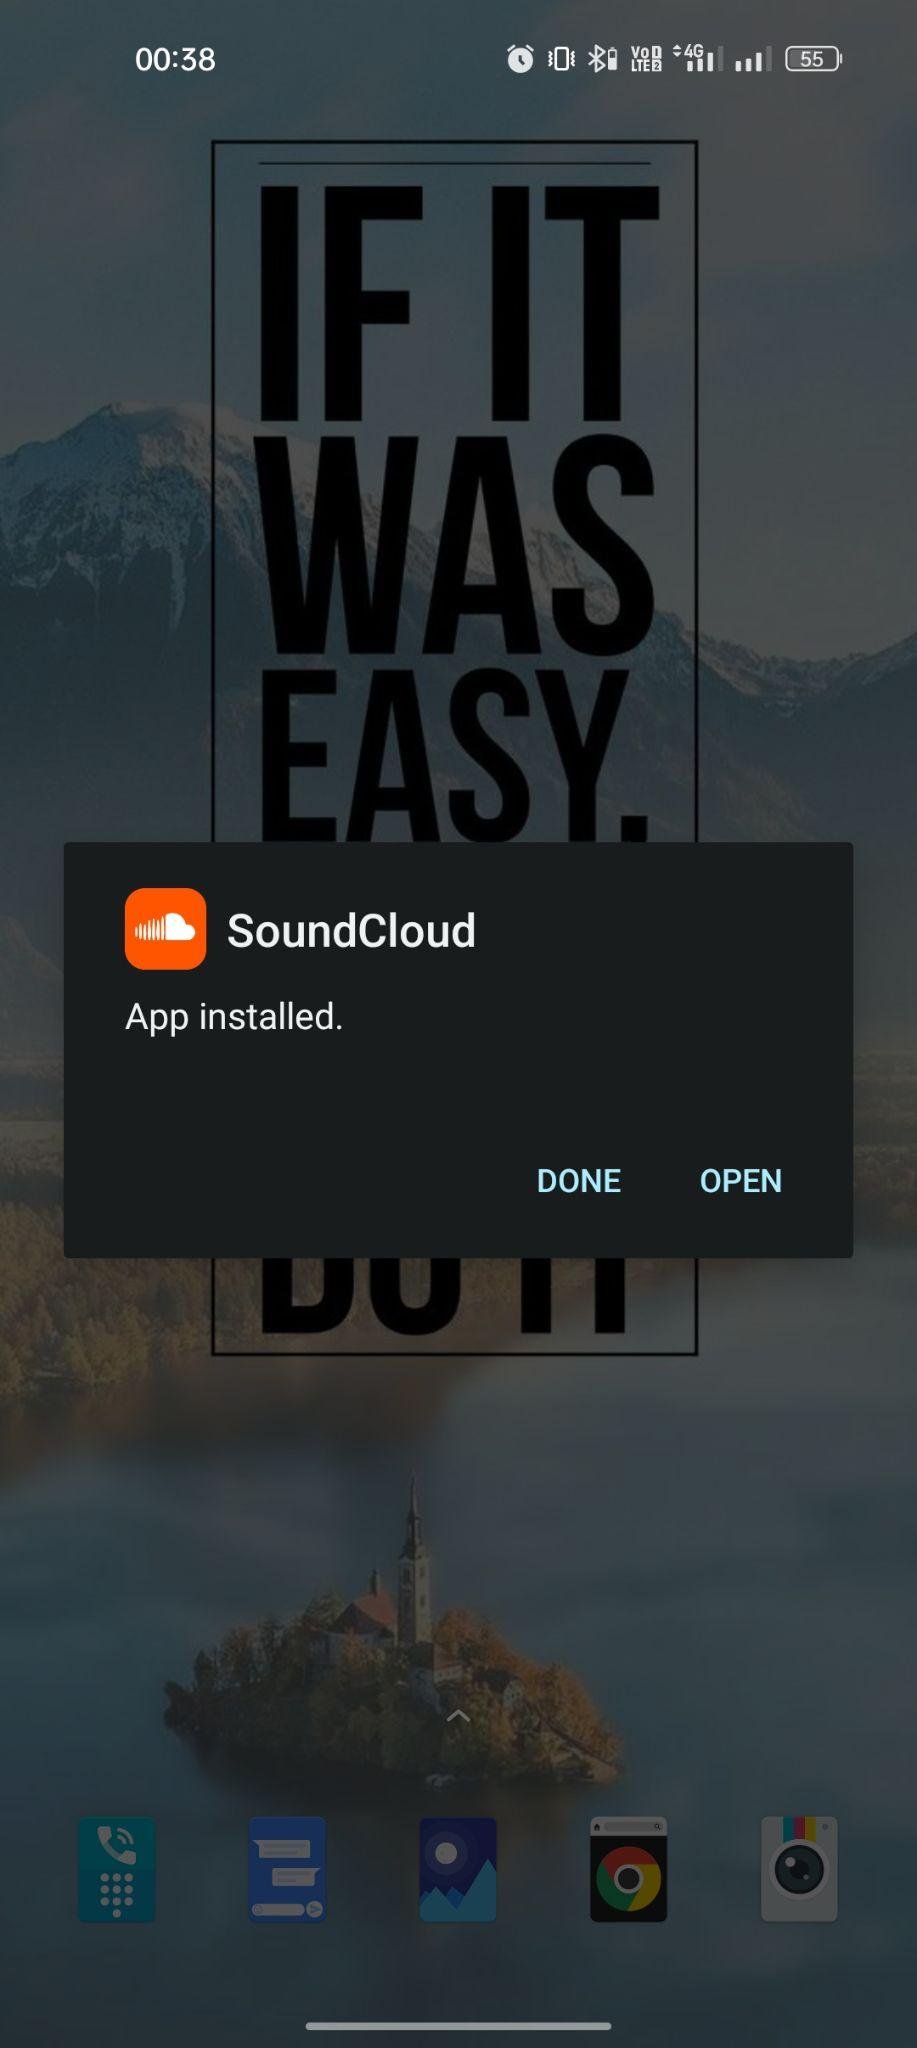 SoundCloud apk installed